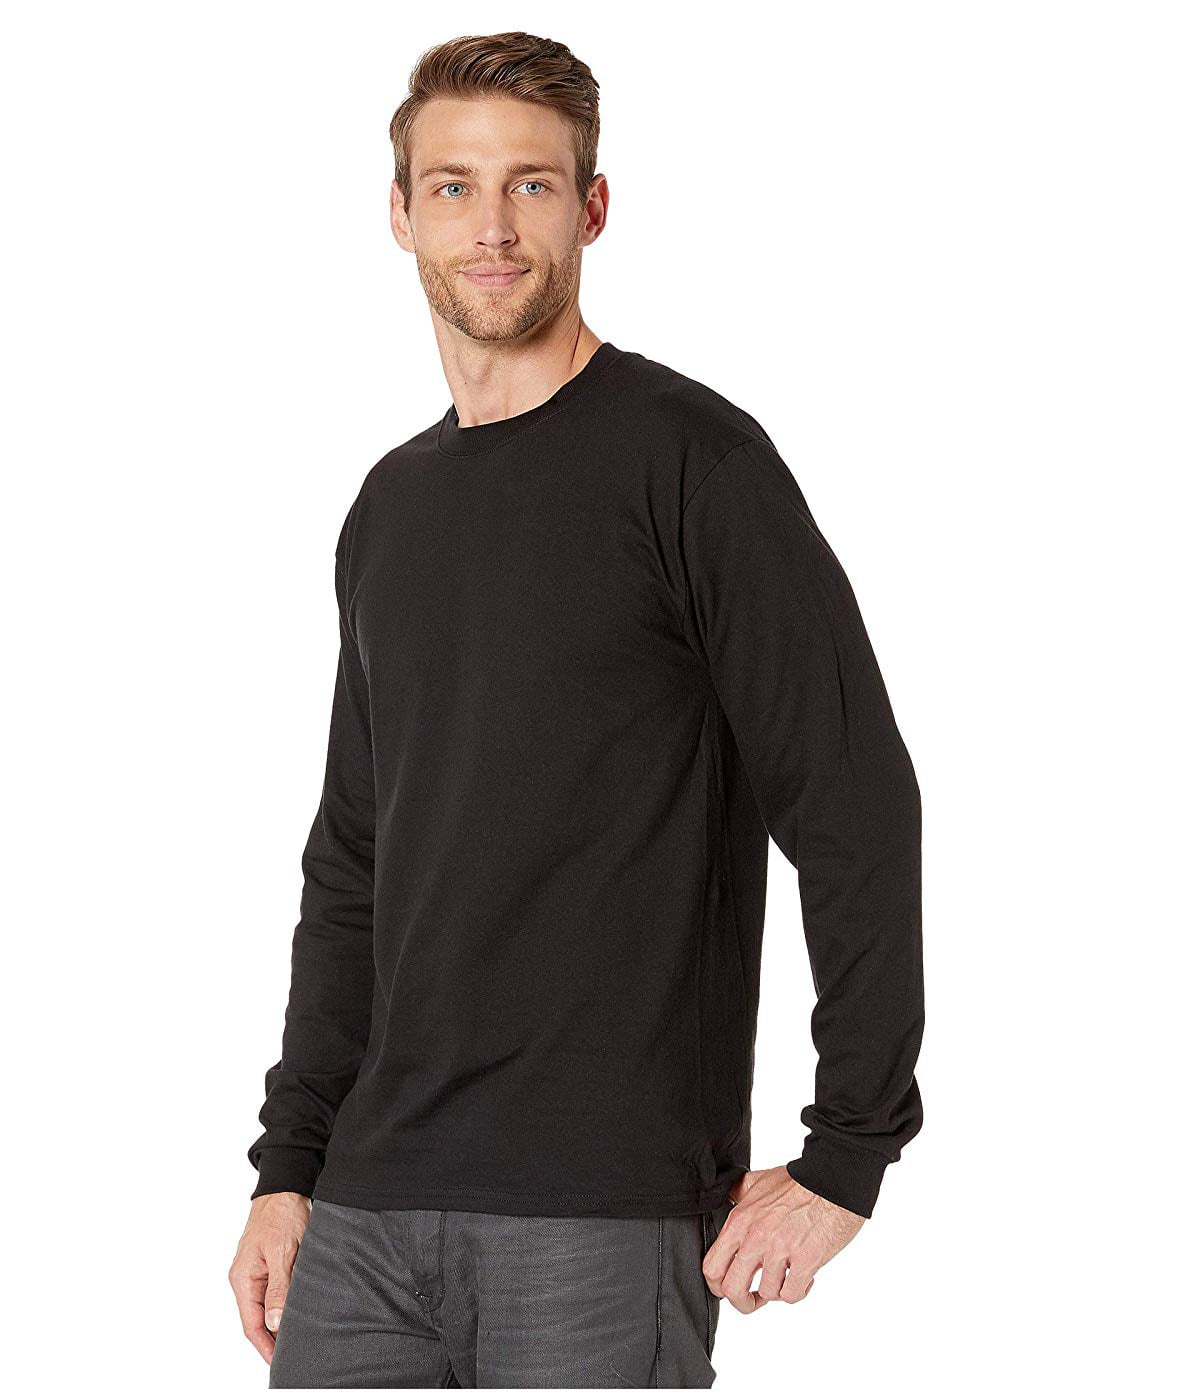 Hanes Beefy-T Crew Neck Long Sleeve T-Shirt Black - Walmart.com ...